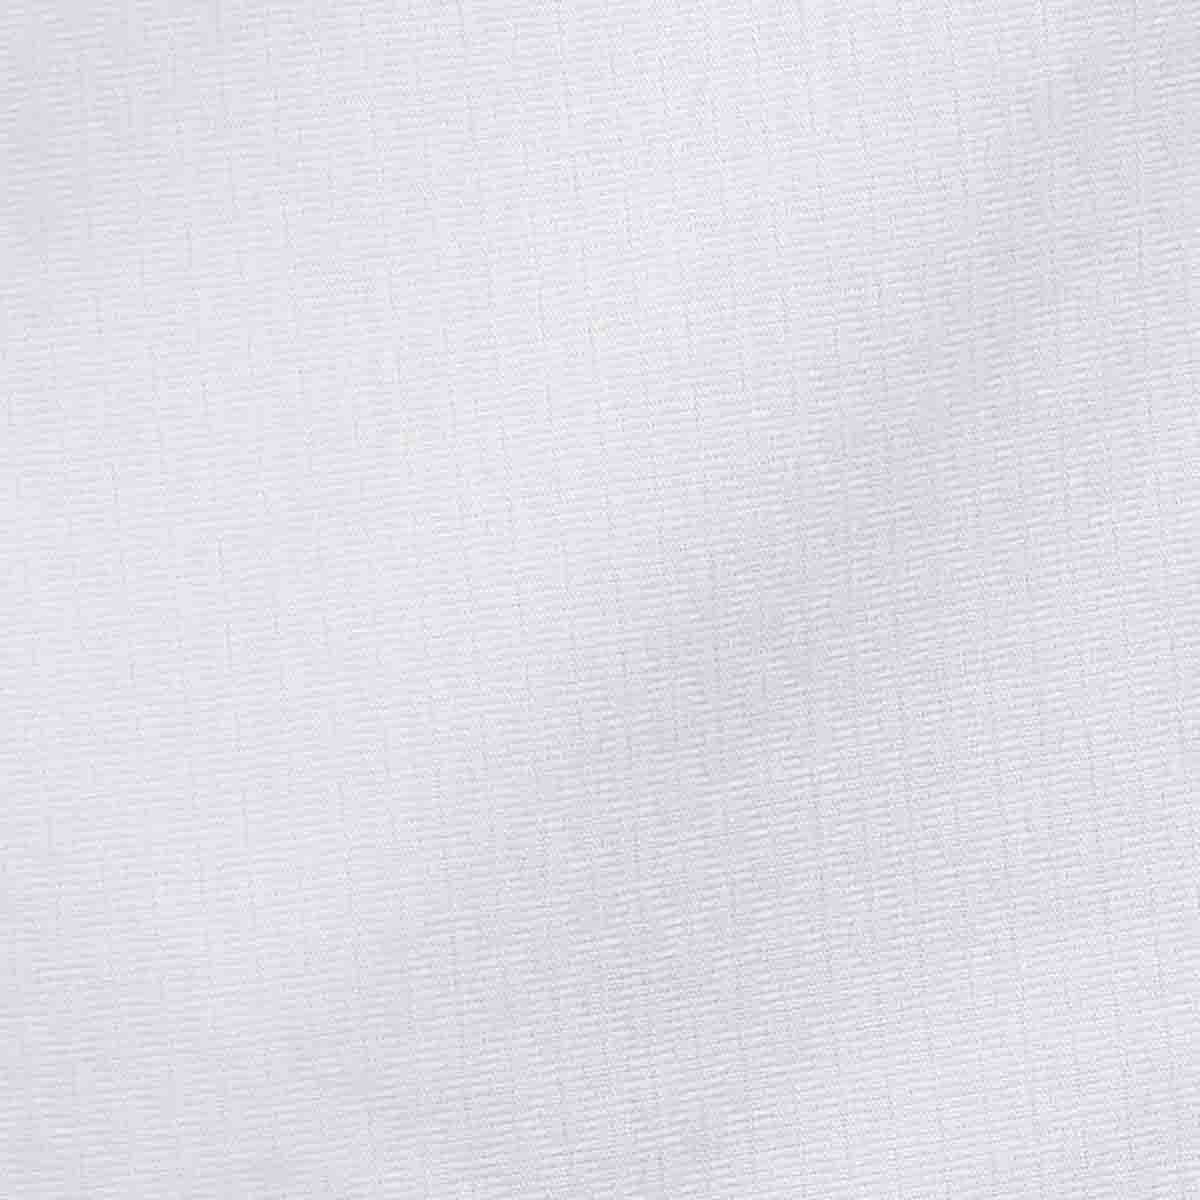 Camisa de Vestir Manga Larga Blanco Nina Ricci para Caballero